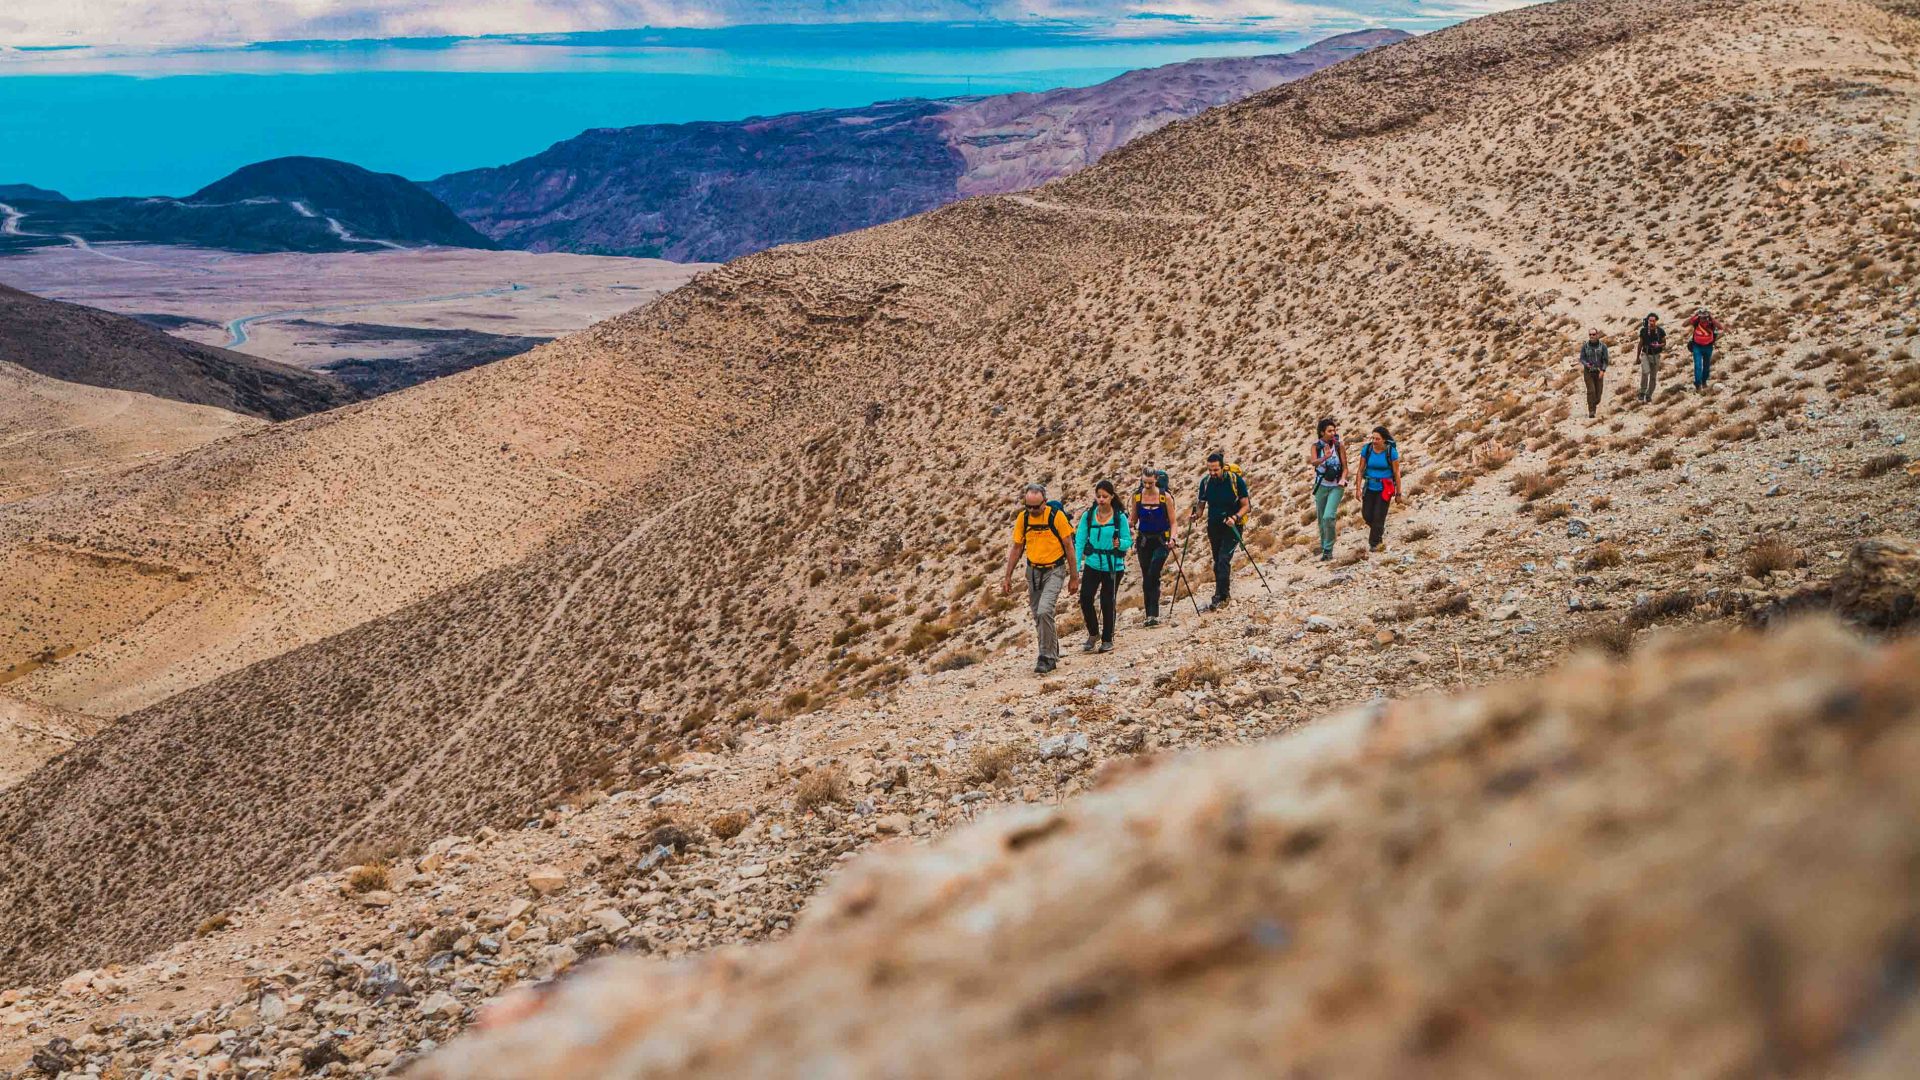 Hikers make their way along the Jordan Trail from Zarqa Main to Wadi Hidan.